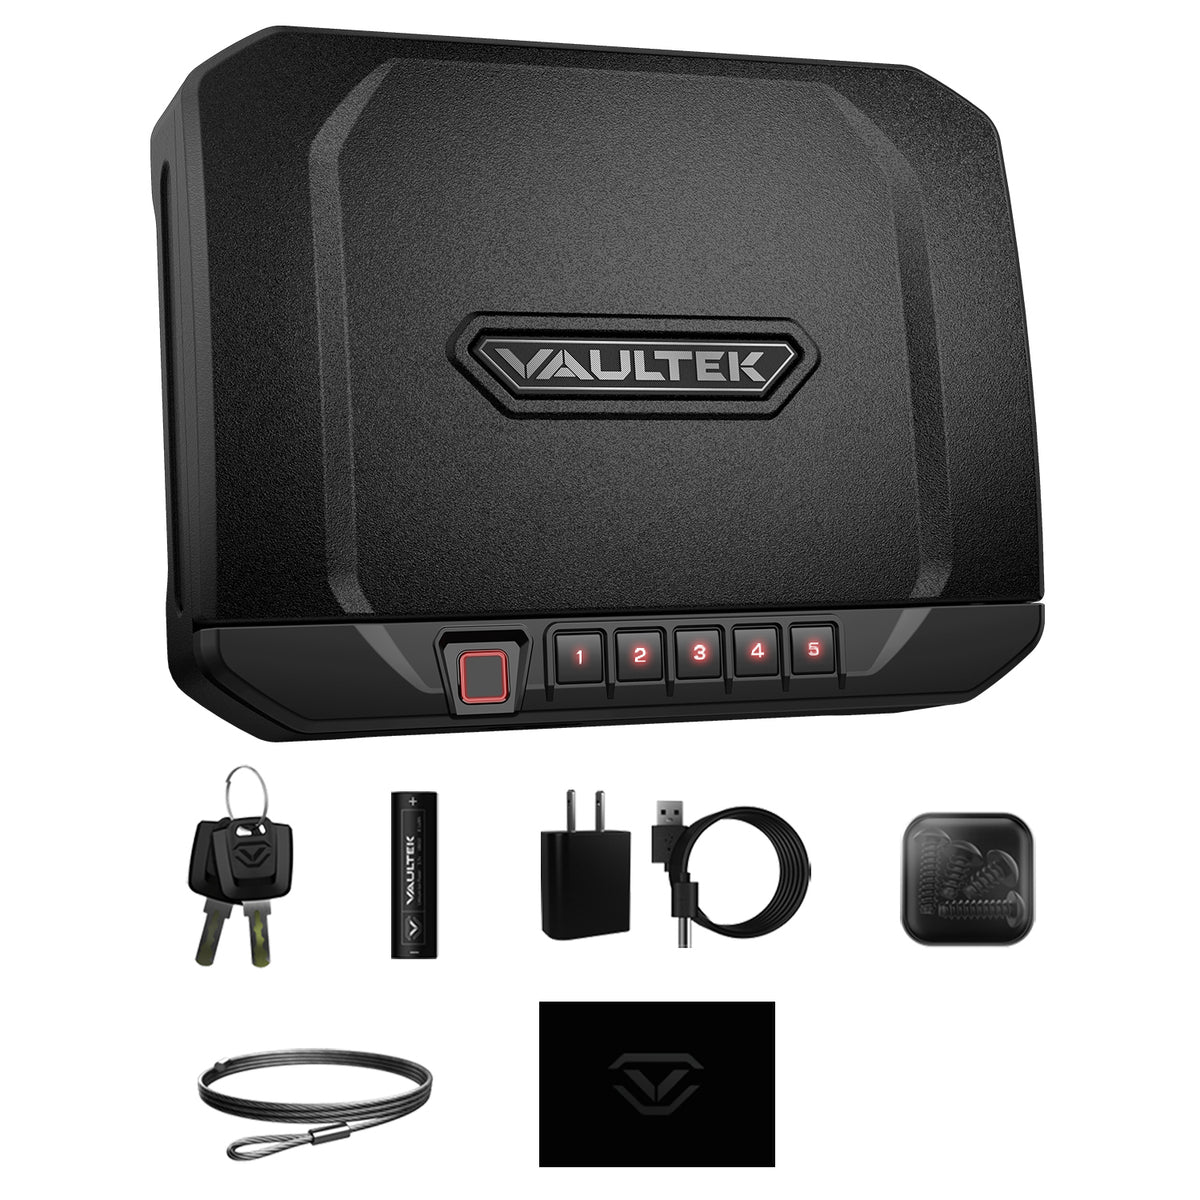 Vaultek VS10i Compact Biometric Bluetooth Smart Safe with Accessories